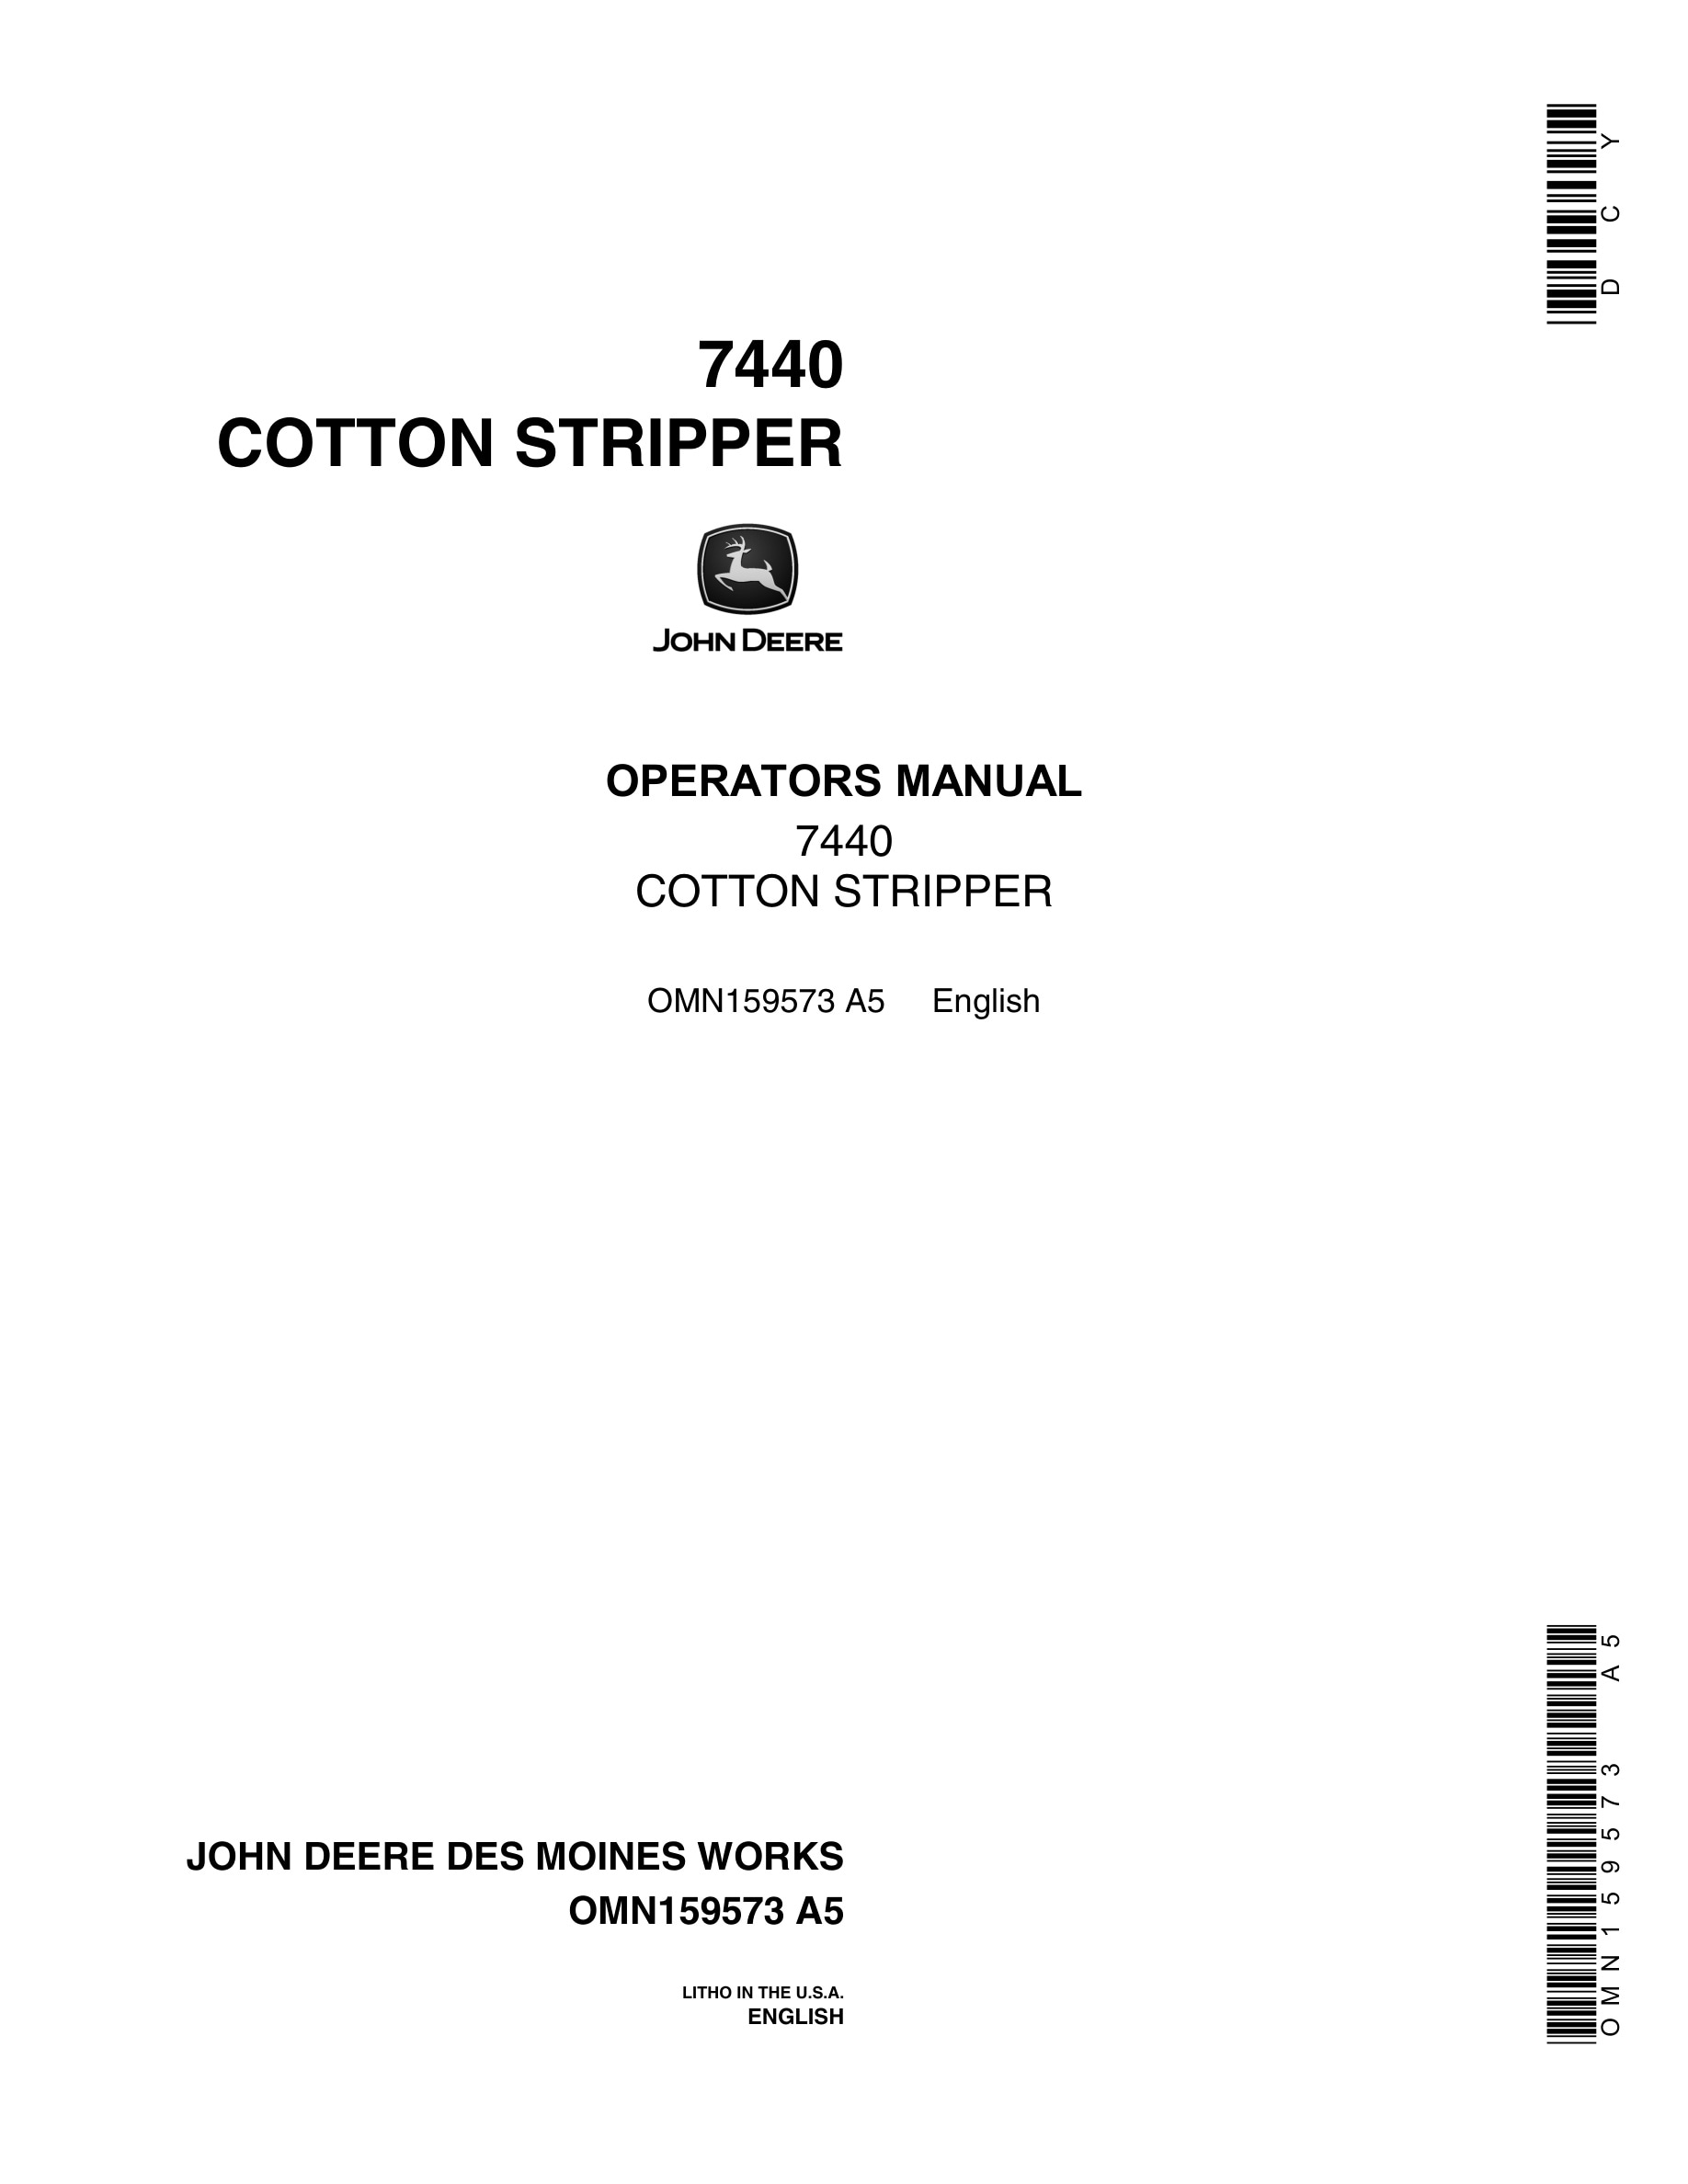 John Deere 7440 Cotton Sripper Operator Manual OMN159573-1